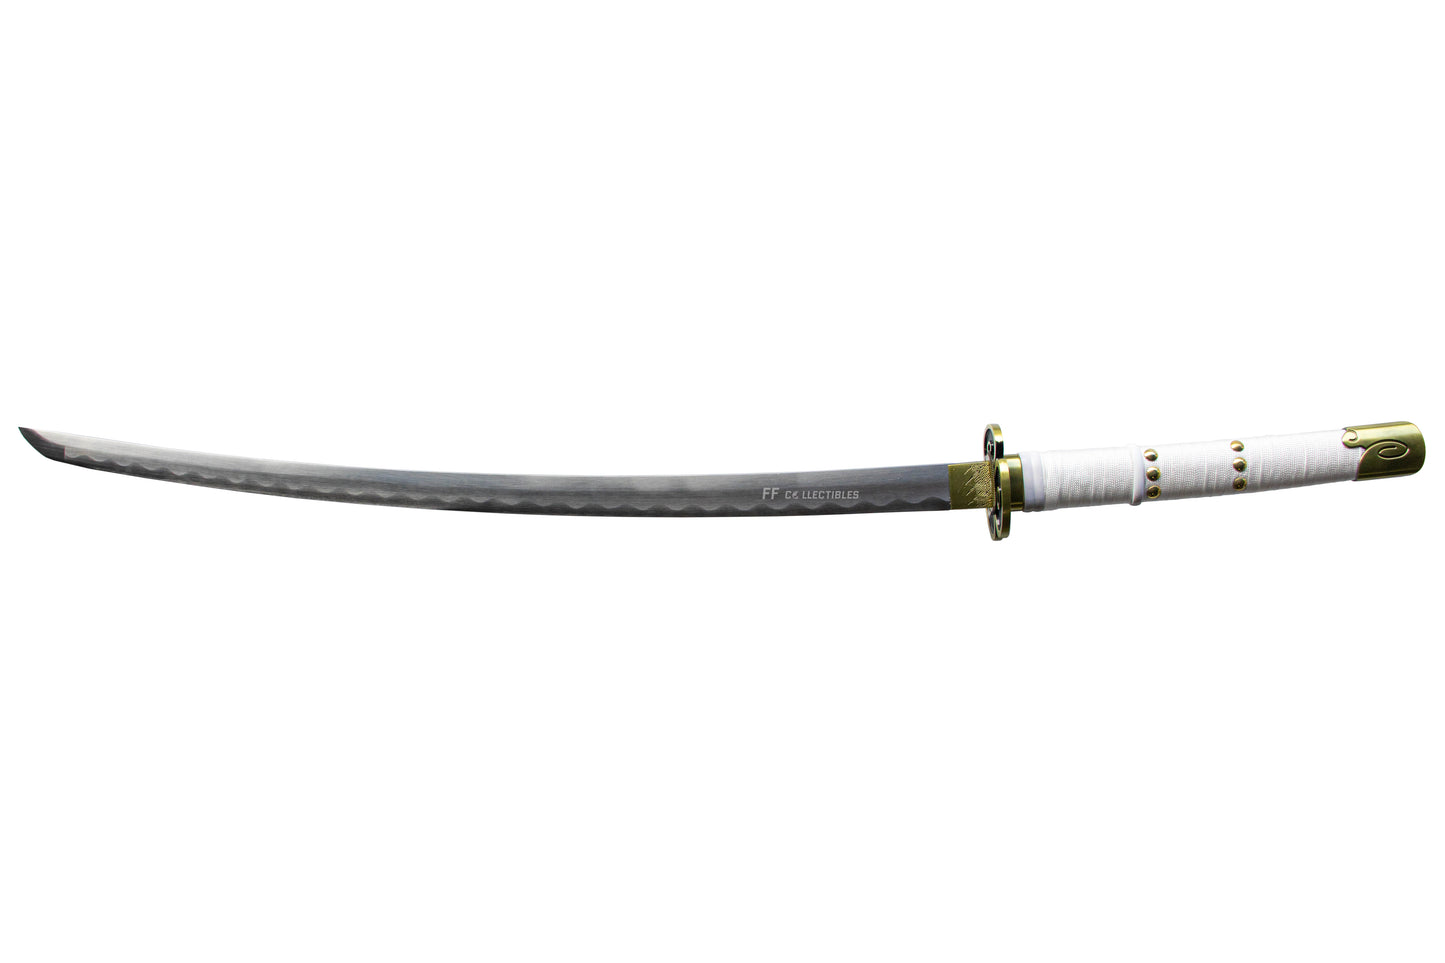 ONE PIECE – AME NO HABAKIRI, THE SWORD OF KOZUKI MOMONOSUKE (w FREE sword stand)